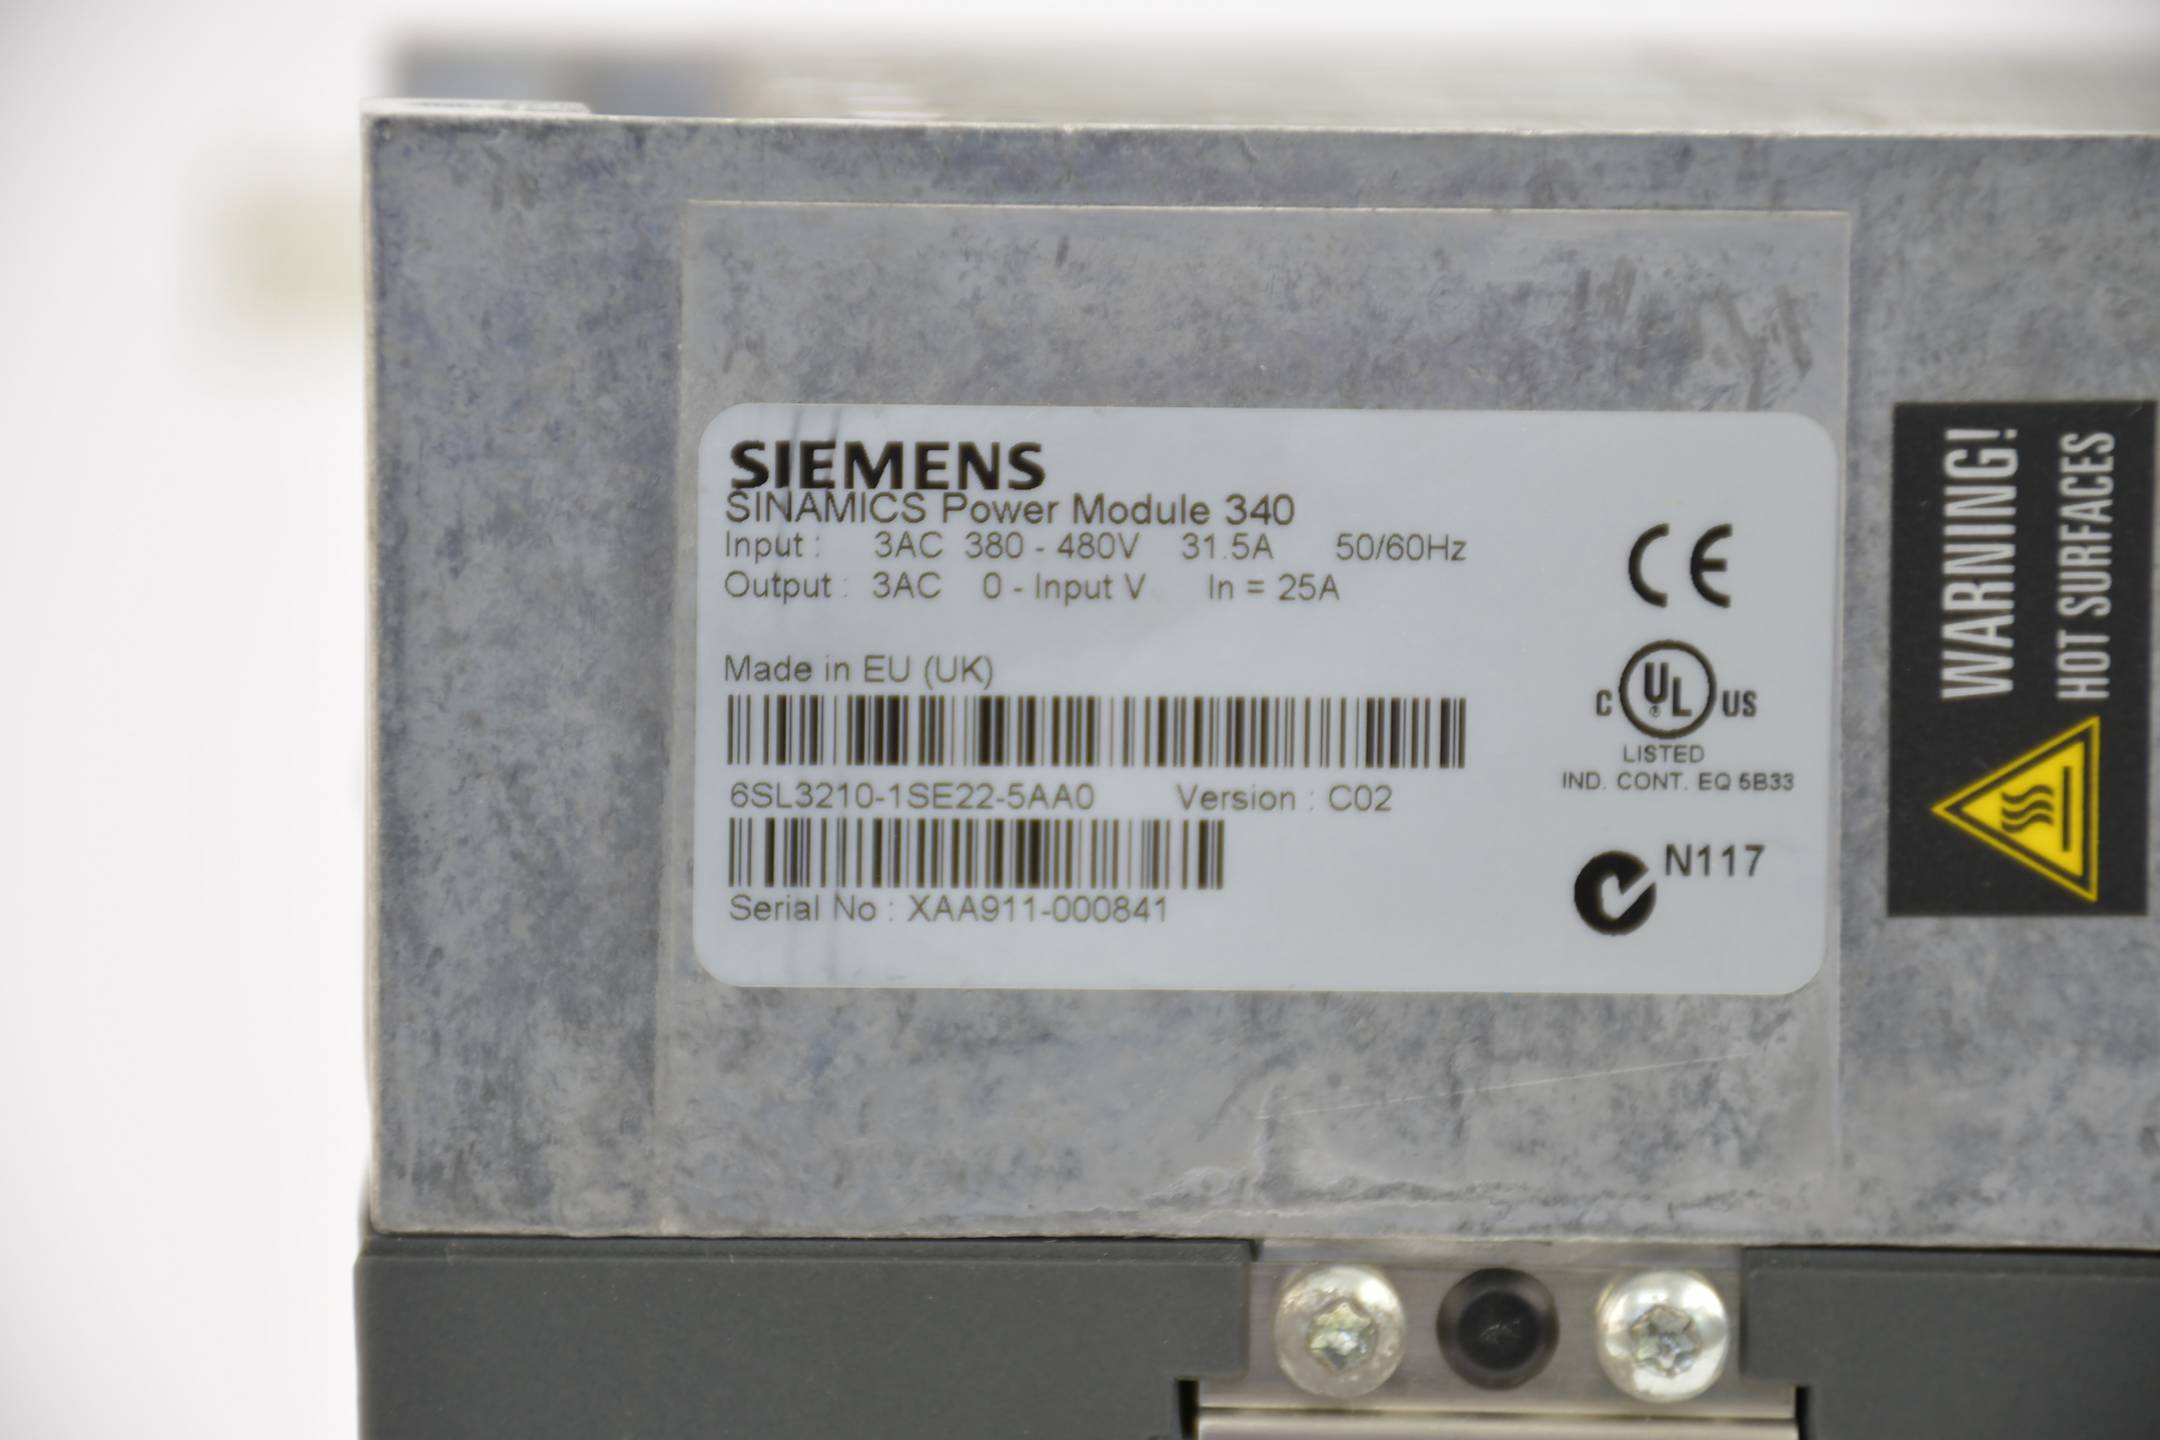 Siemens sinamics S120 PM340 6SL3210-1SE22-5AA0 ( 6SL3 210-1SE22-5AA0 ) Ver C02